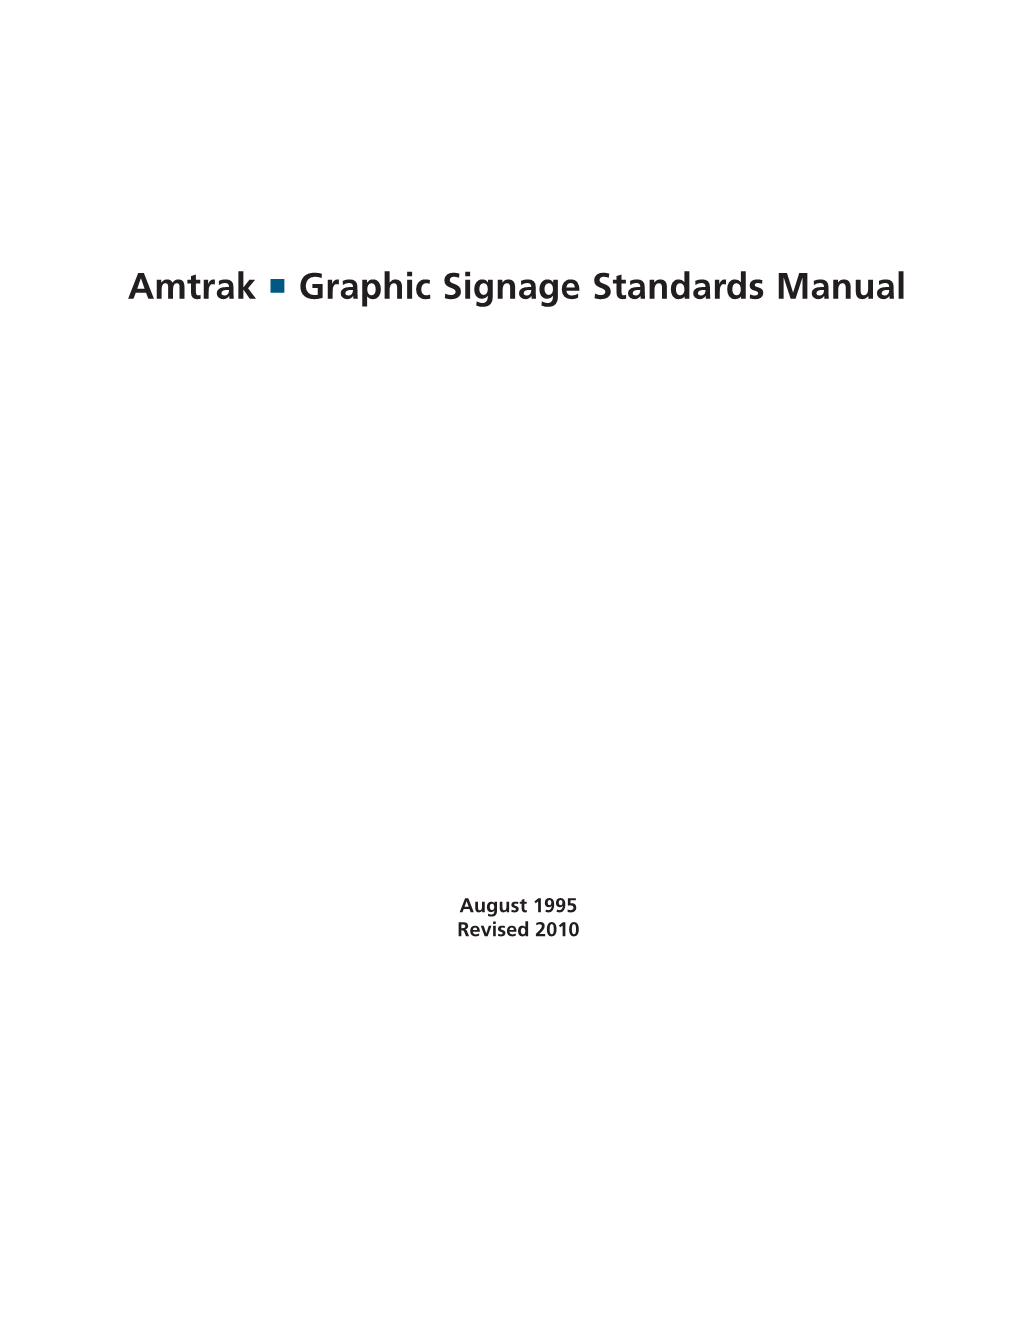 Amtrak Graphic Signage Standards Manual, 2010